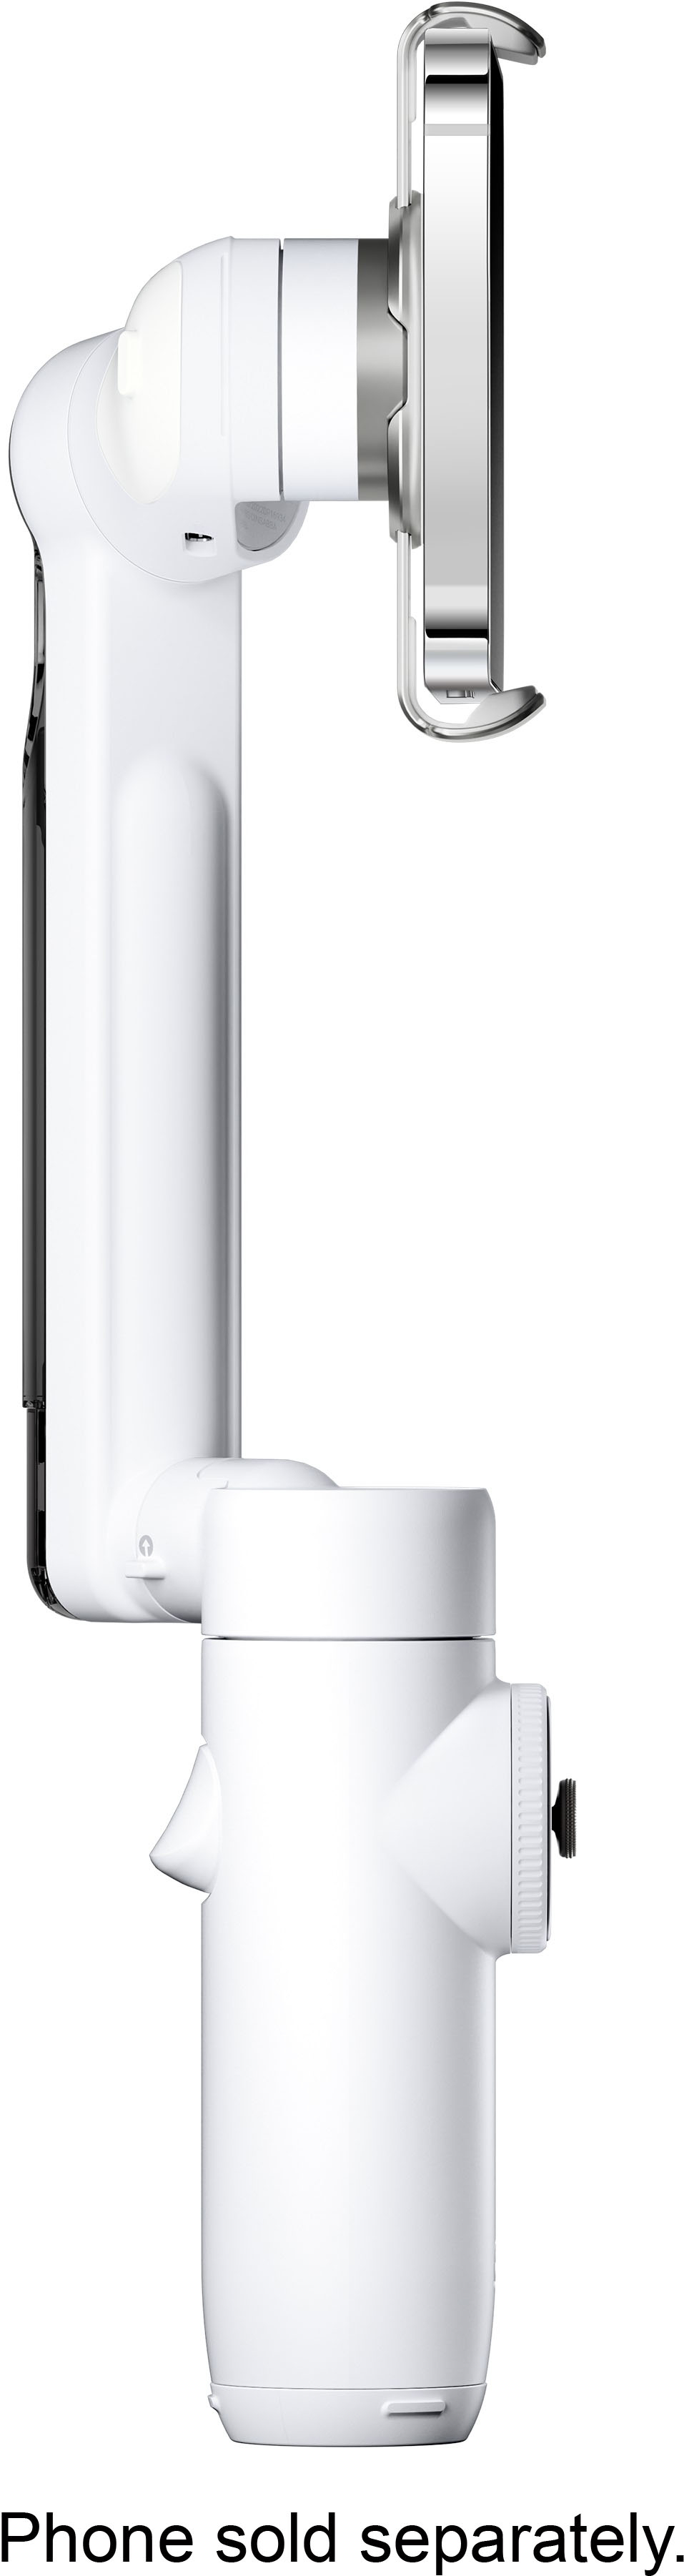 Insta360 Flow Smartphone Gimbal Stabilizer (Gray) - CINSABBA